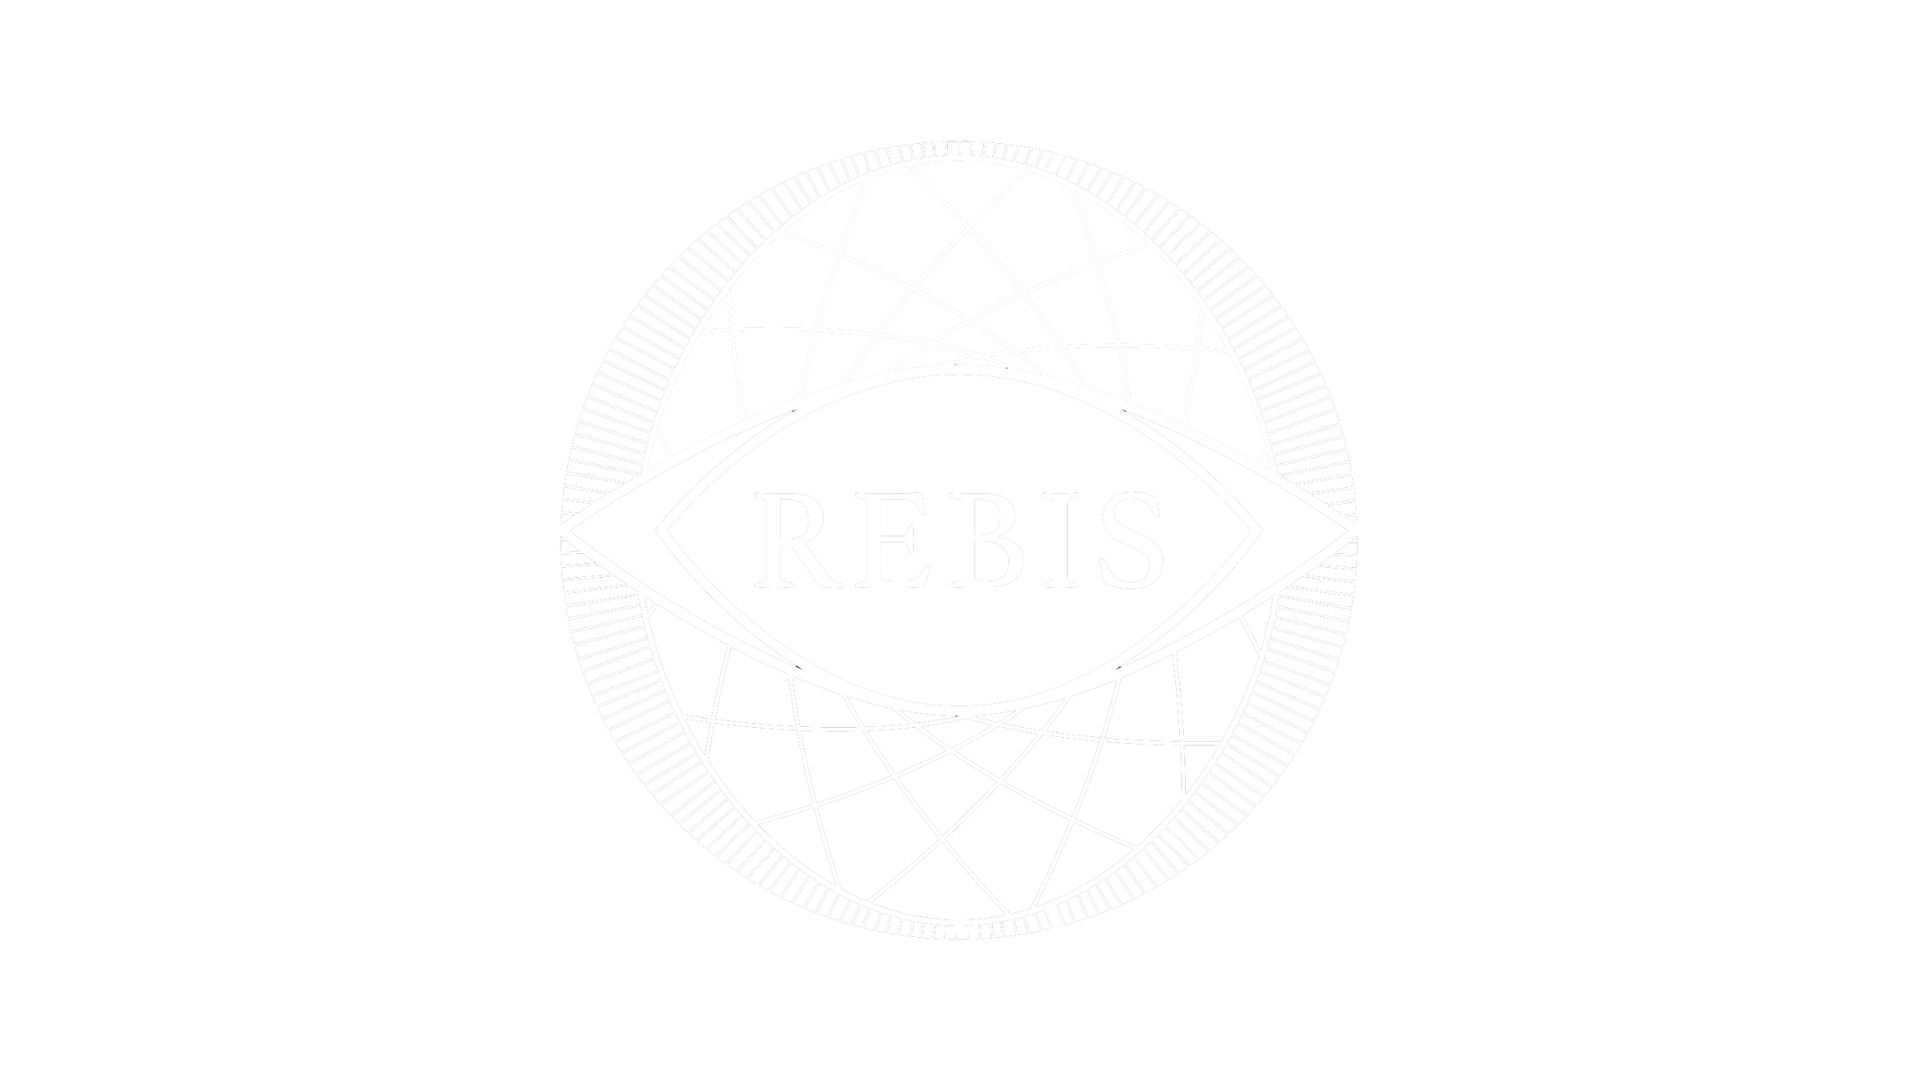 Rebis